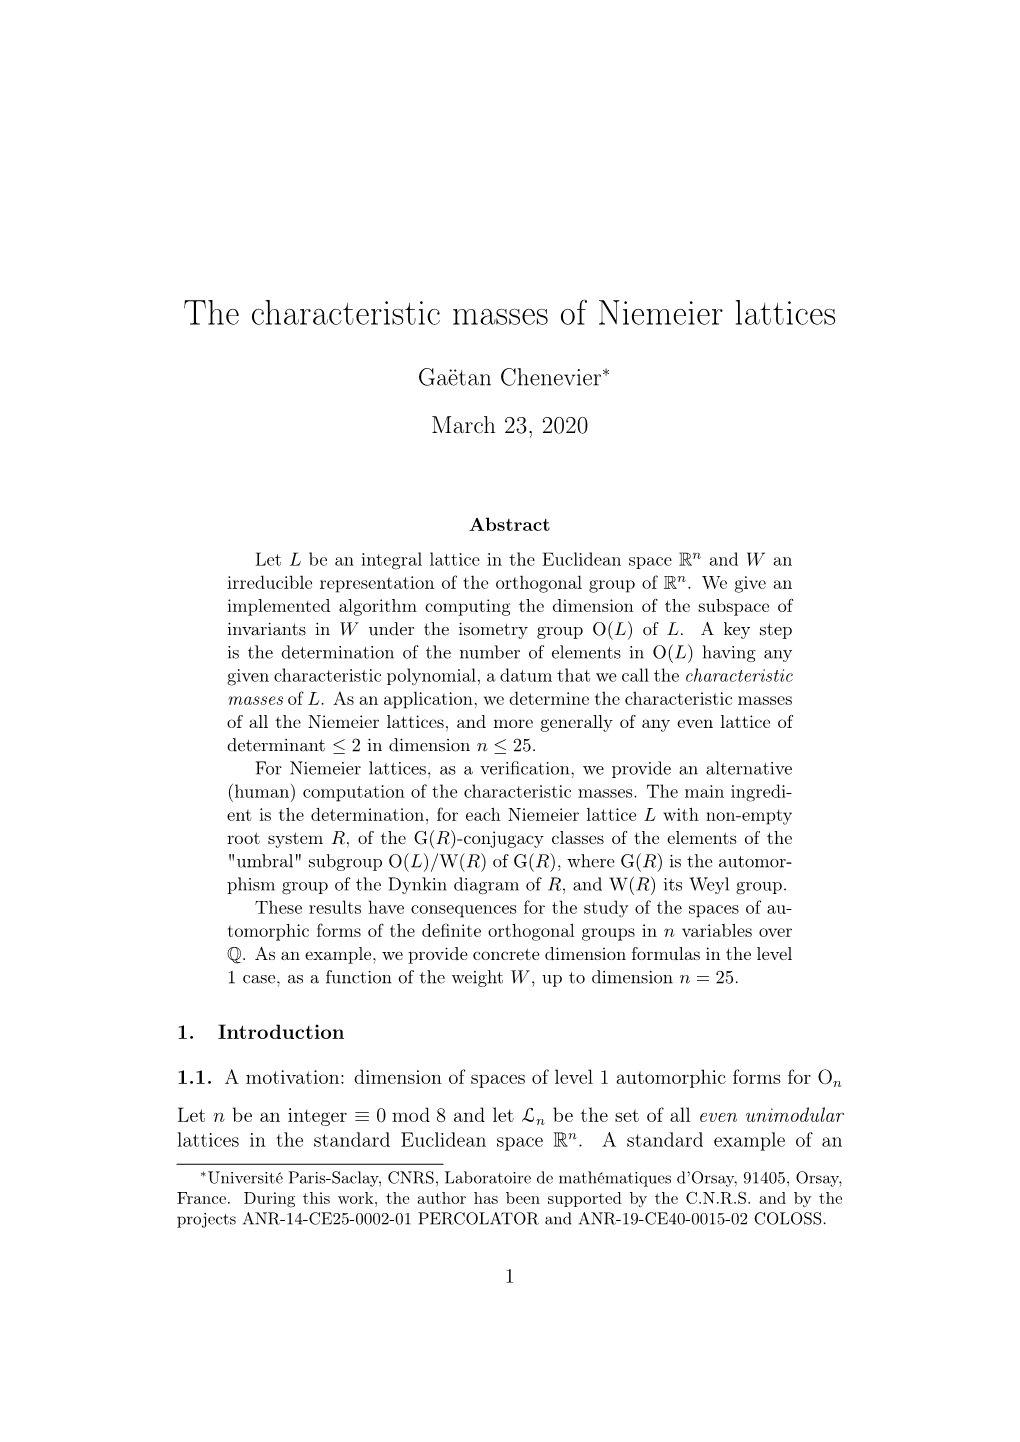 The Characteristic Masses of Niemeier Lattices